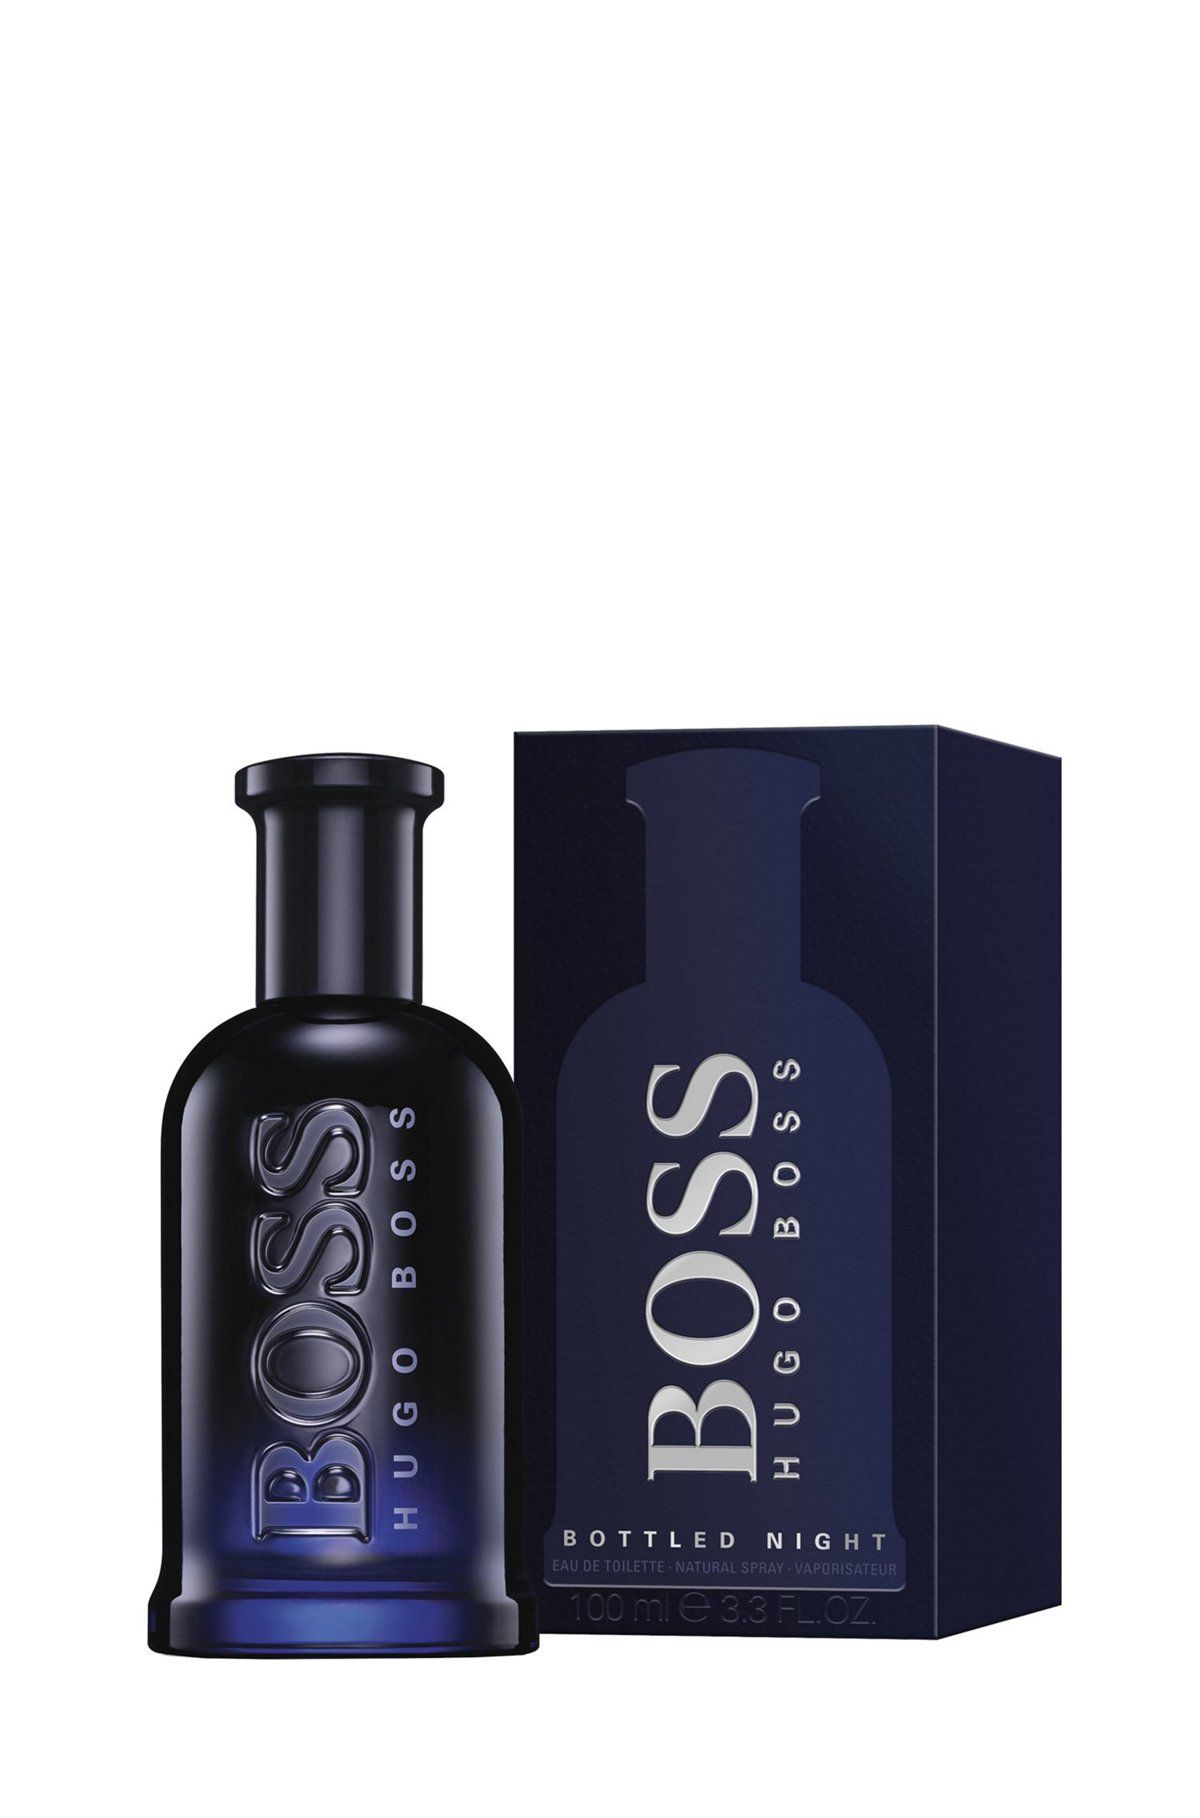 Купить мужскую воду босс. Hugo Boss Bottled Night 100 ml. Hugo Boss Bottled Night. EDT. 100 Ml. Hugo Boss Boss Bottled Night Eau de Toilette. Hugo Boss - Bottled Night 100мл.